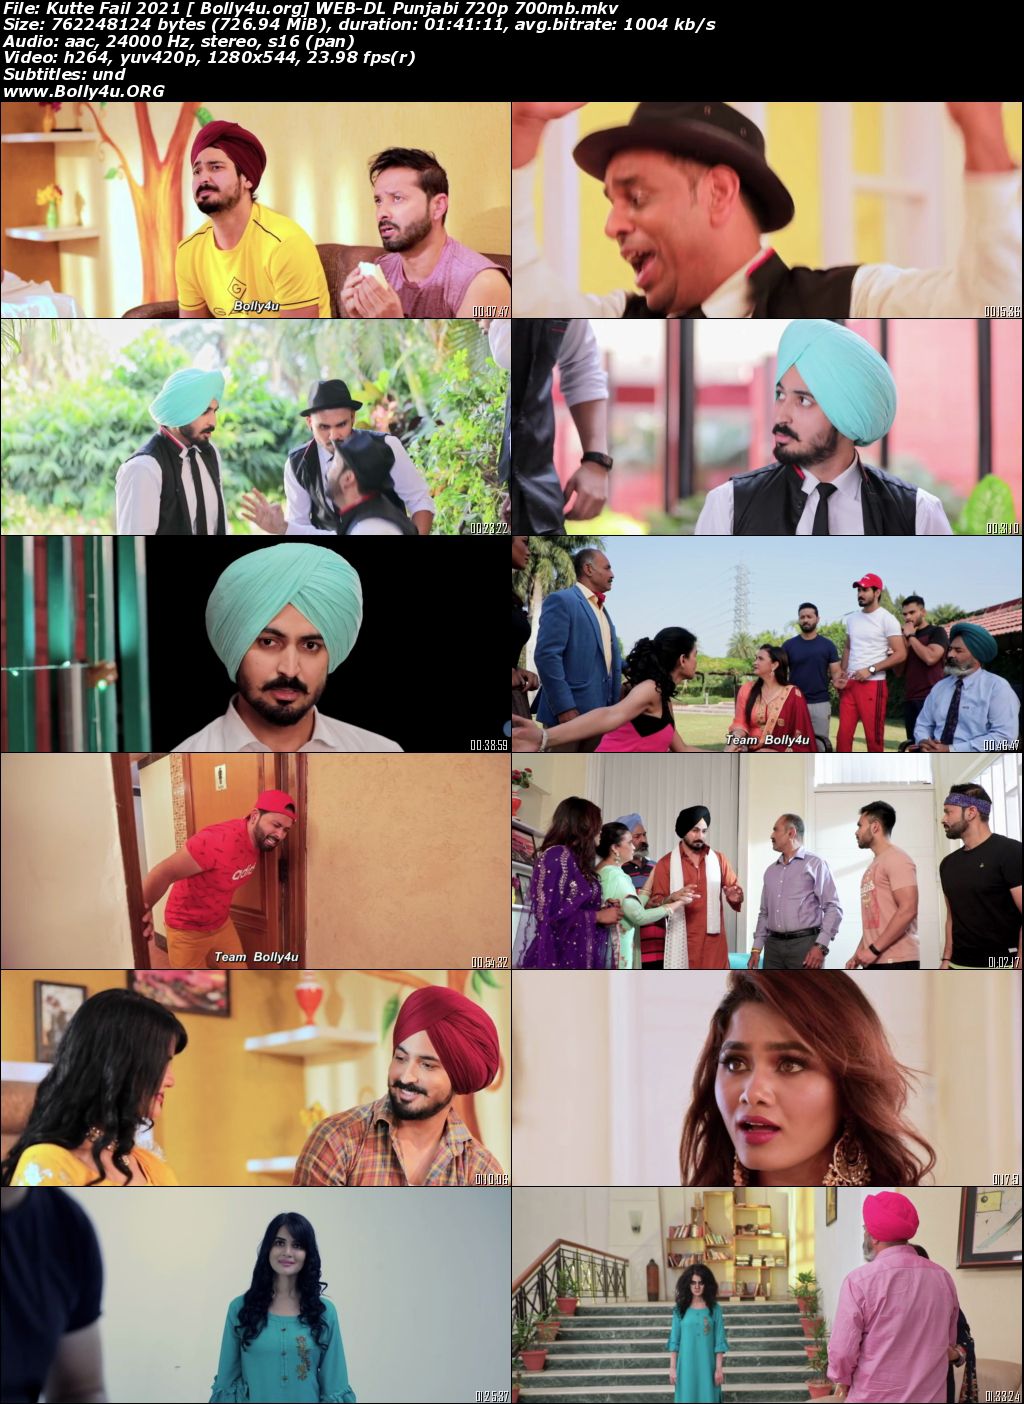 Kutte Fail 2021 WEB-DL 700Mb Punjabi Movie Download 720p